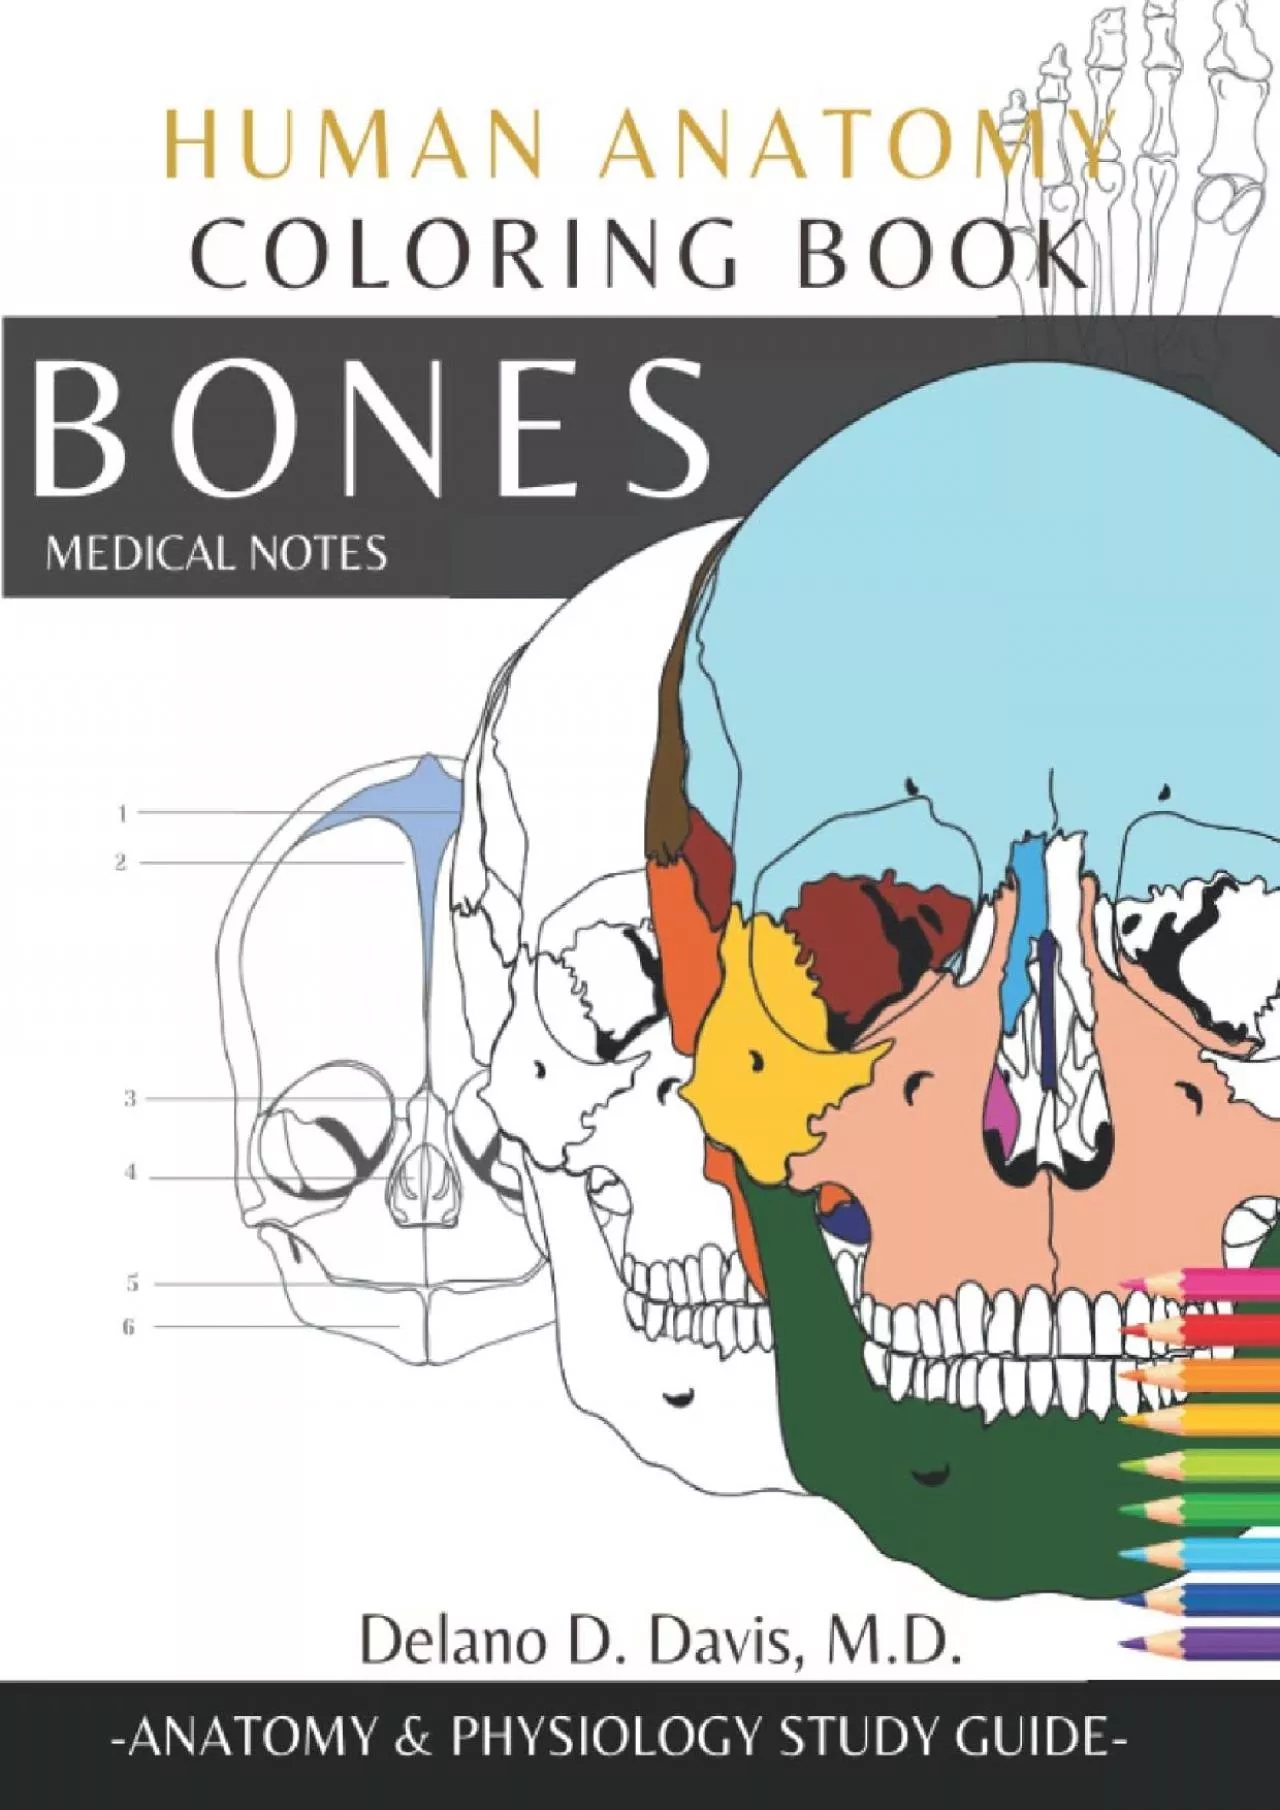 [DOWNLOAD] Human Anatomy Coloring Book: Bones. Medical Notes | Detailed illustrations